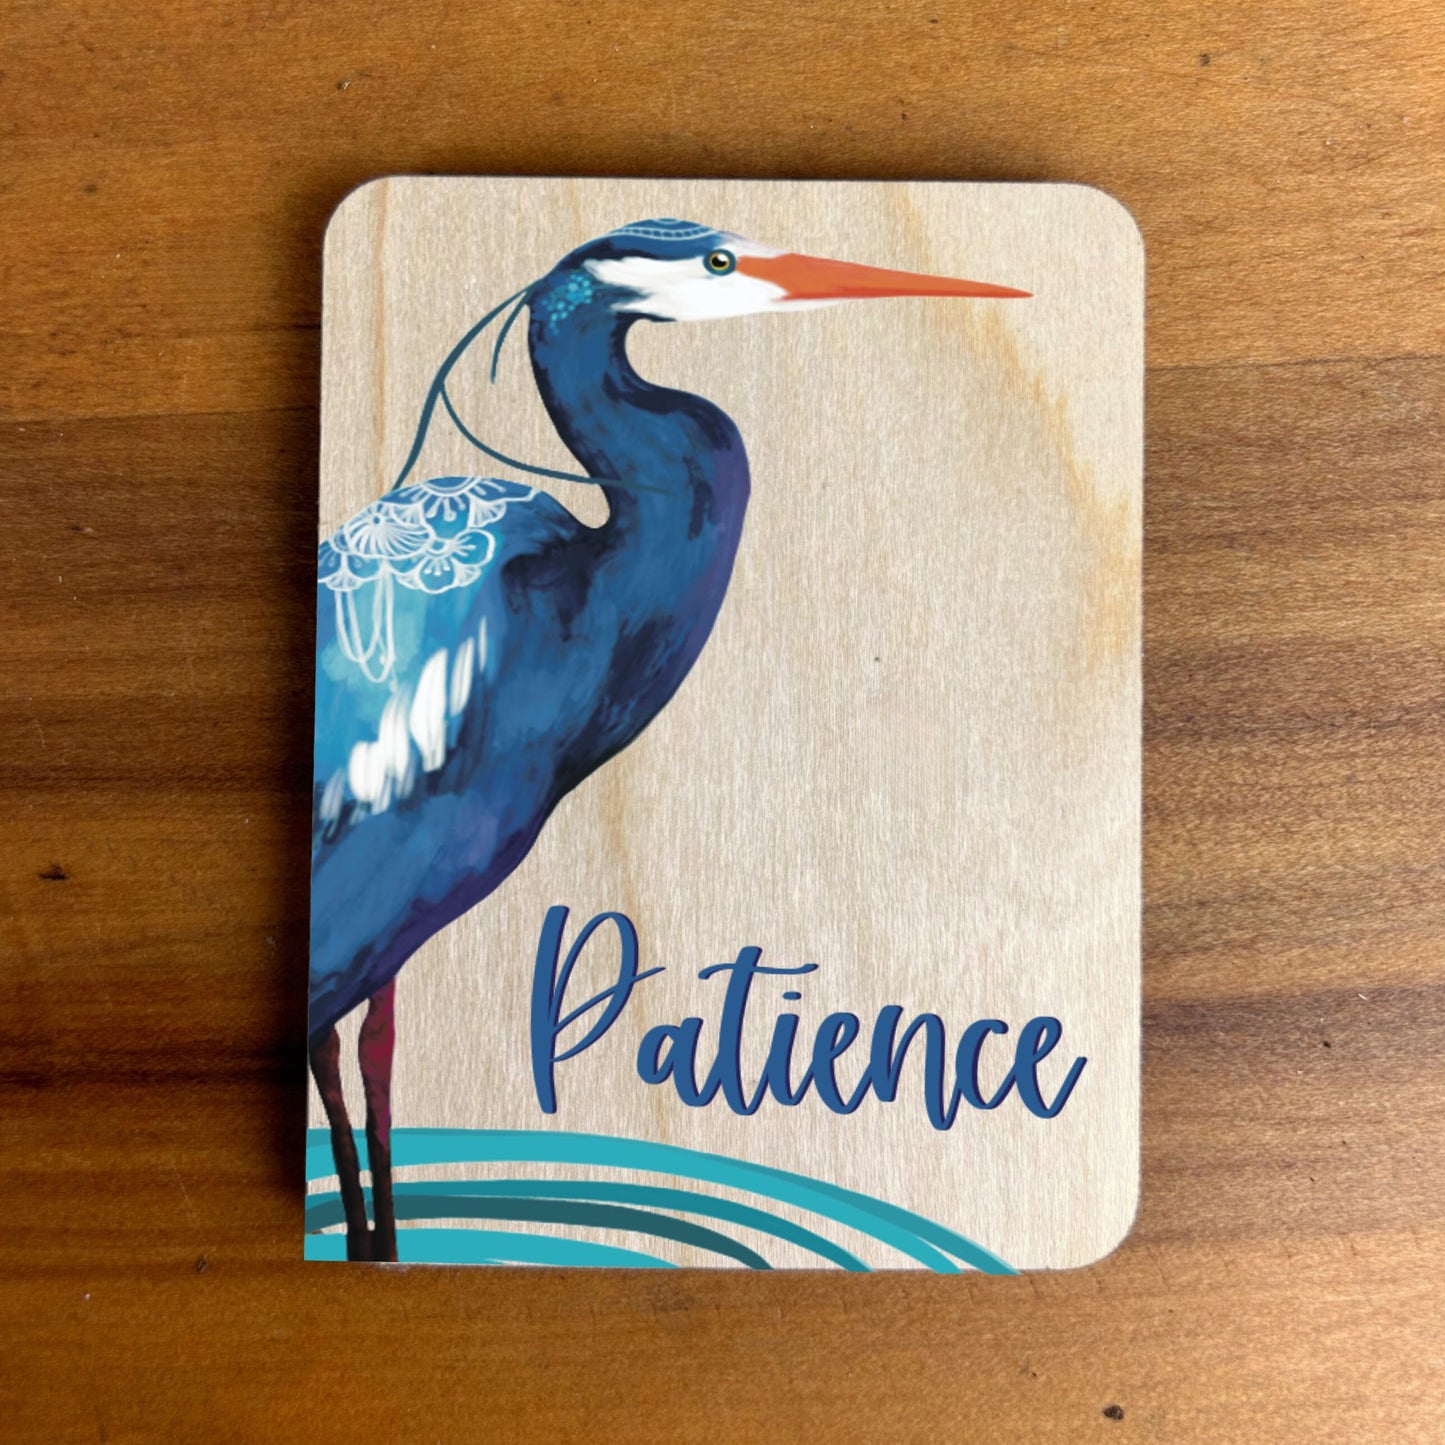 Gratitude Magnet - Patience uv print on wooden magnet
